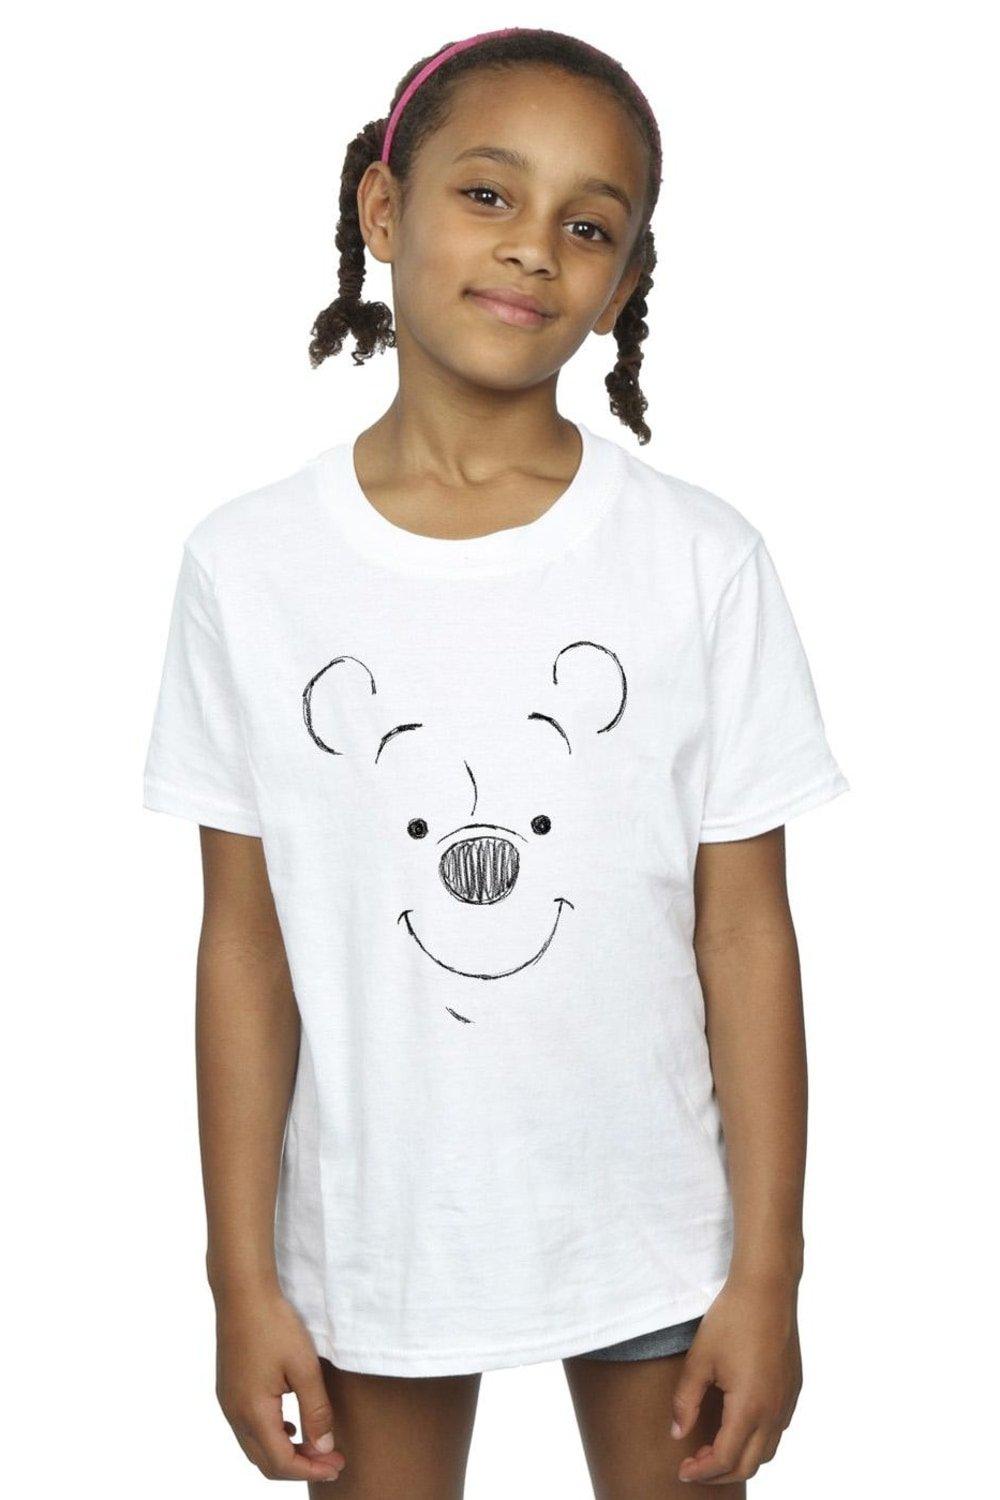 Winnie The Pooh Winnie The Pooh Face Cotton T-Shirt